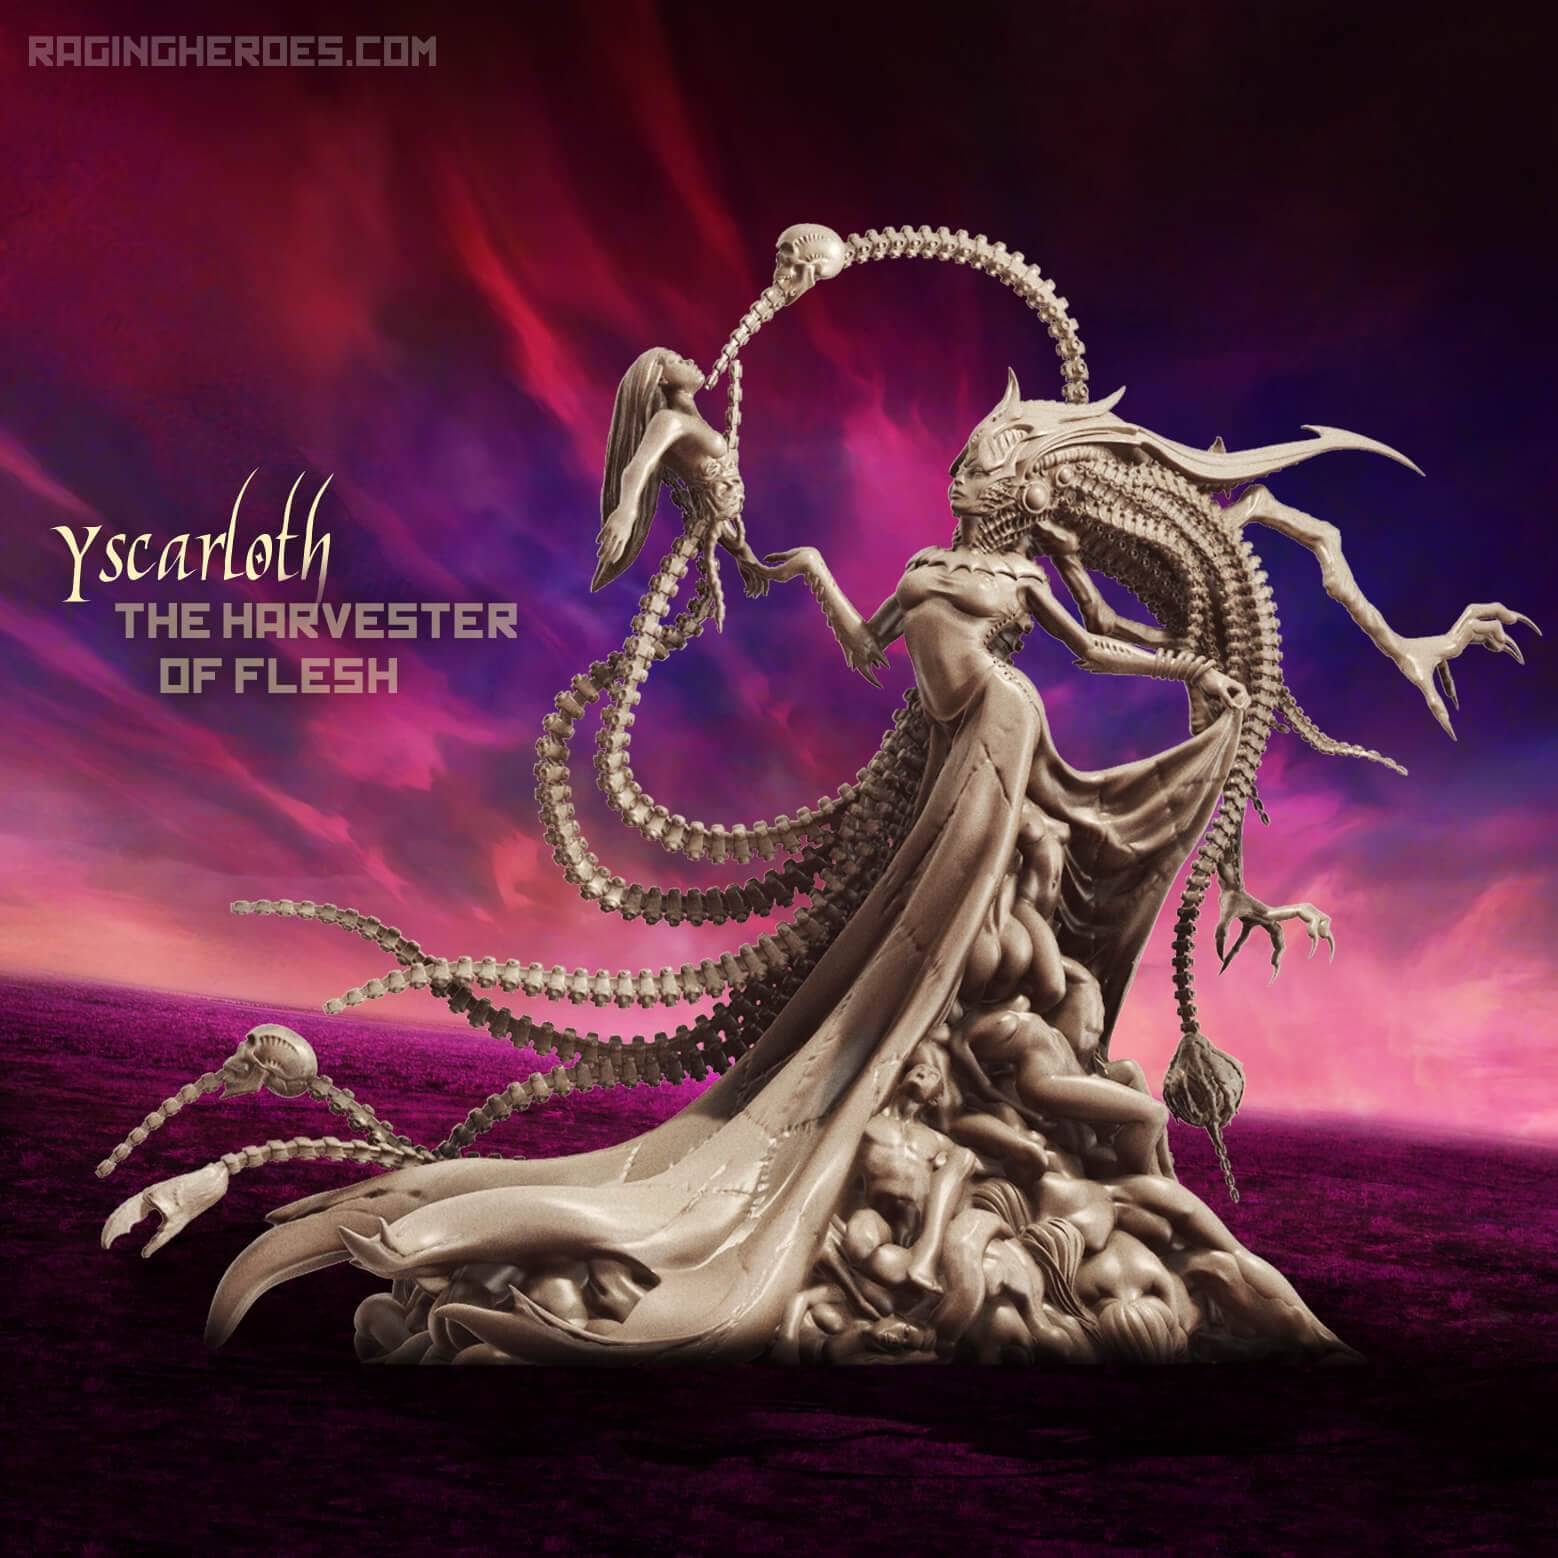 Yscarloth, The Harvester of Flesh, versione fantascientifica (Le - SF)